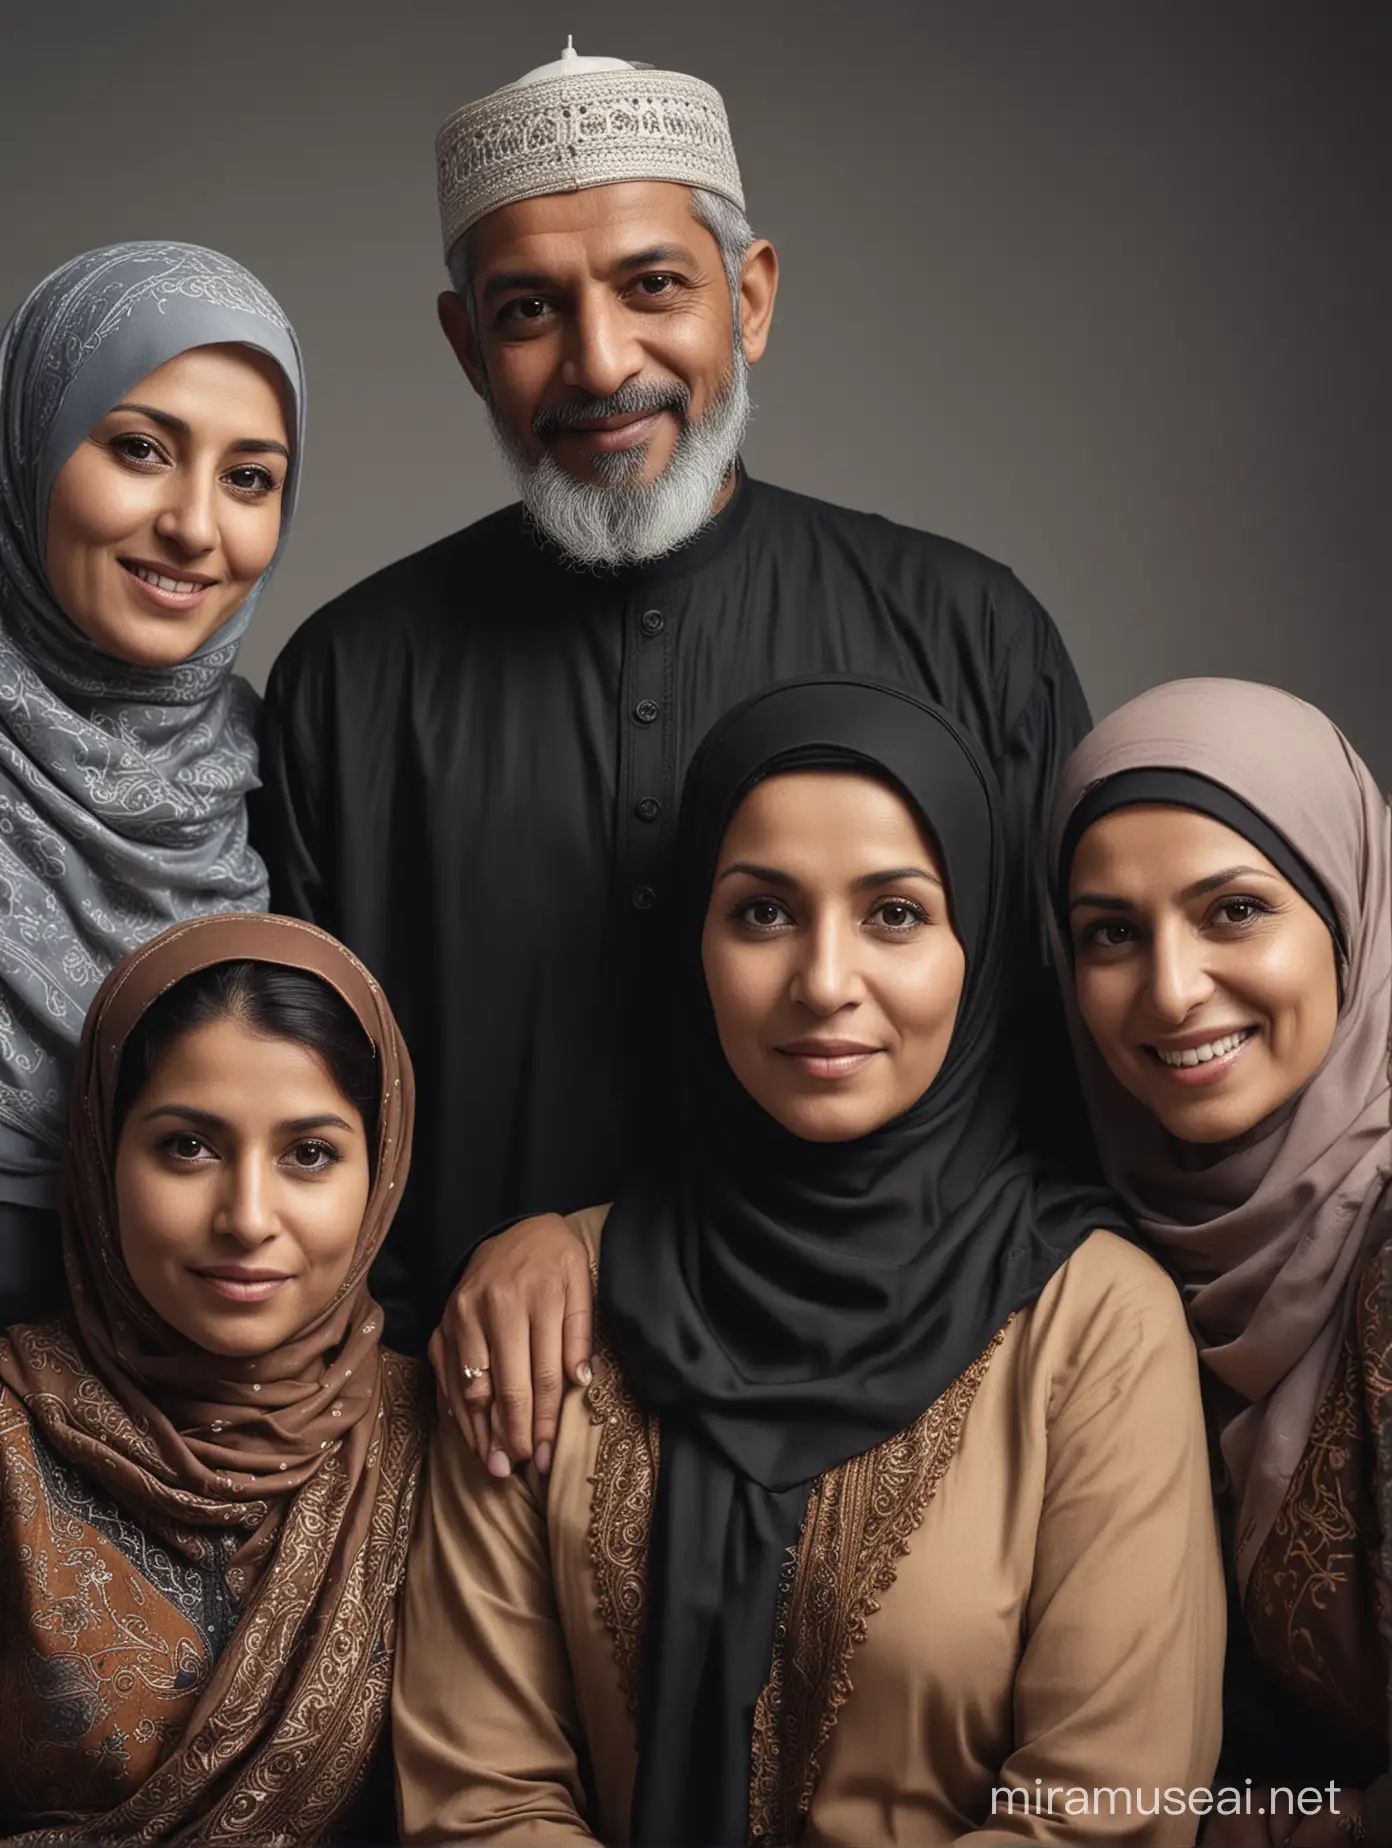 CloseKnit Muslim Family Portrait in Cinematic Super HD Realism